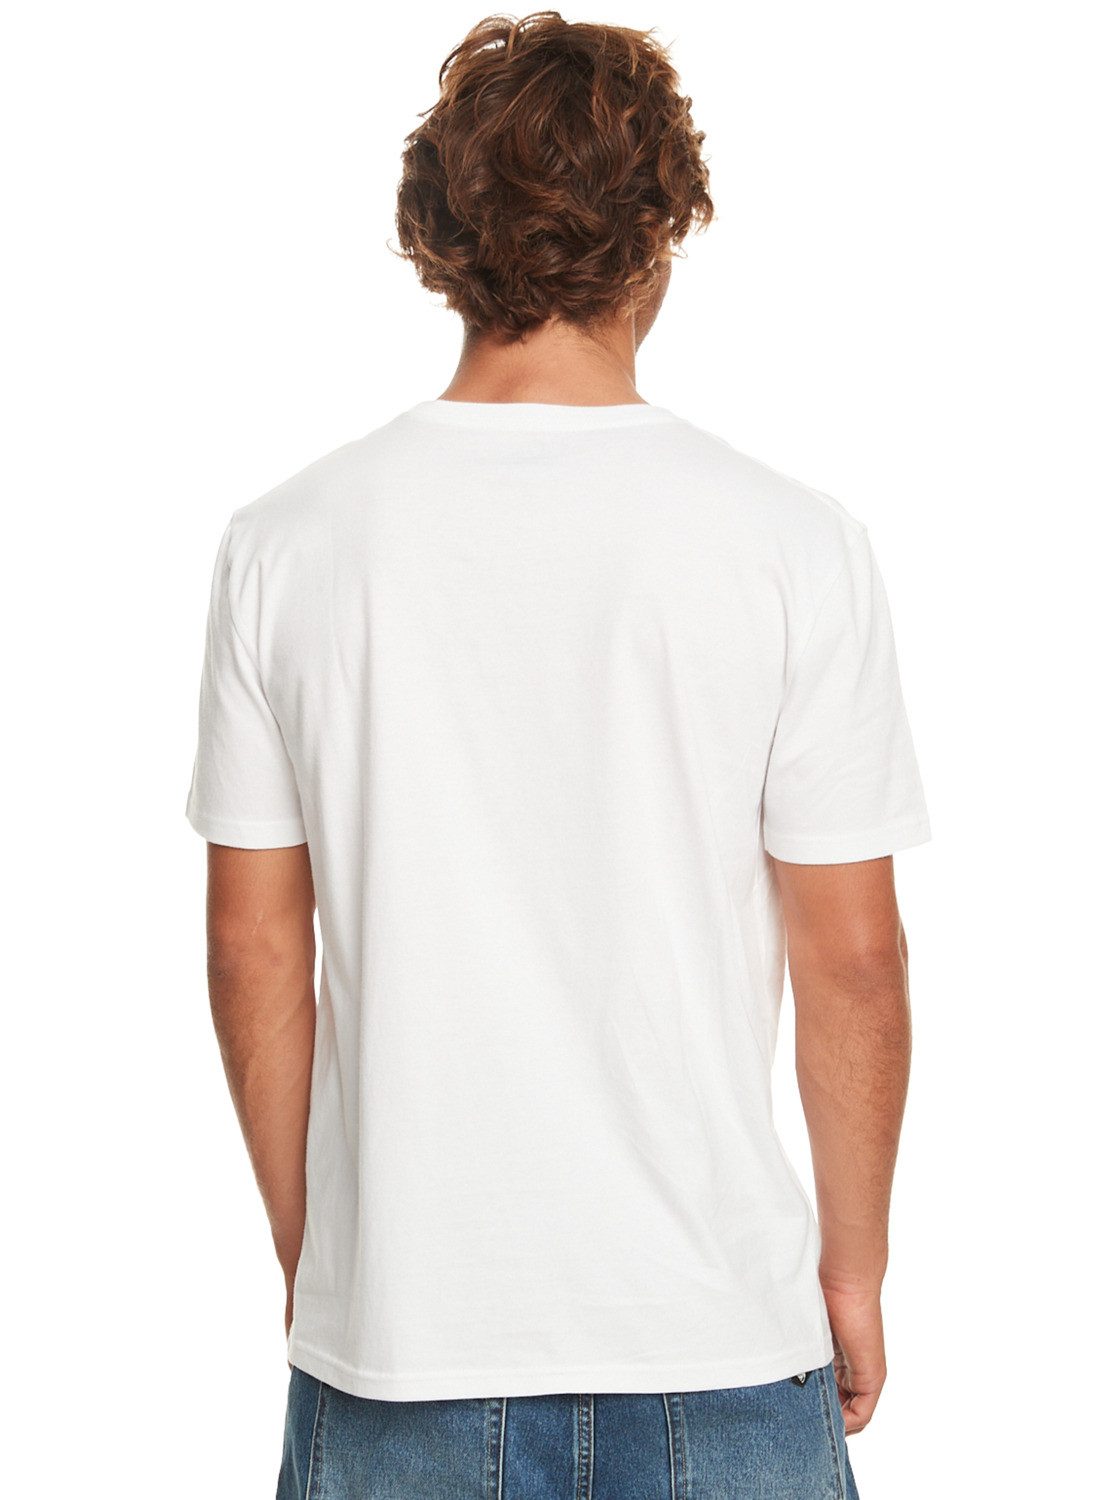 White Circle Trim Quiksilver T-Shirt